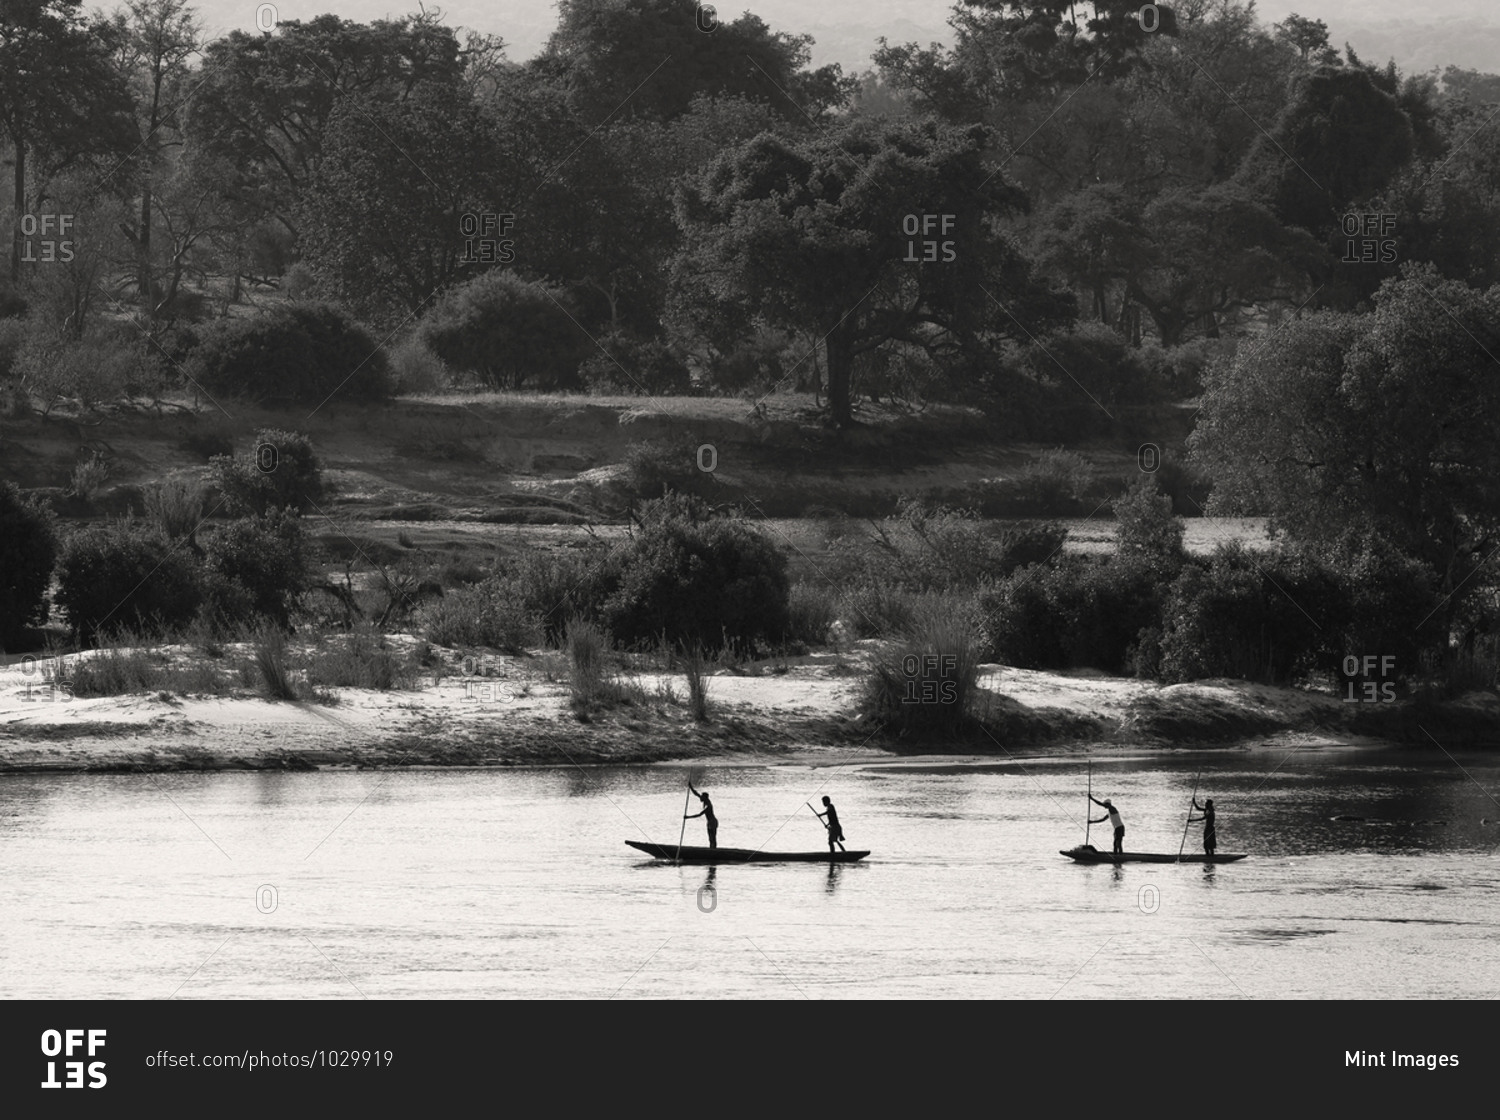 Locals going down the Zambezi River in traditional mokoro canoes, Zambia.